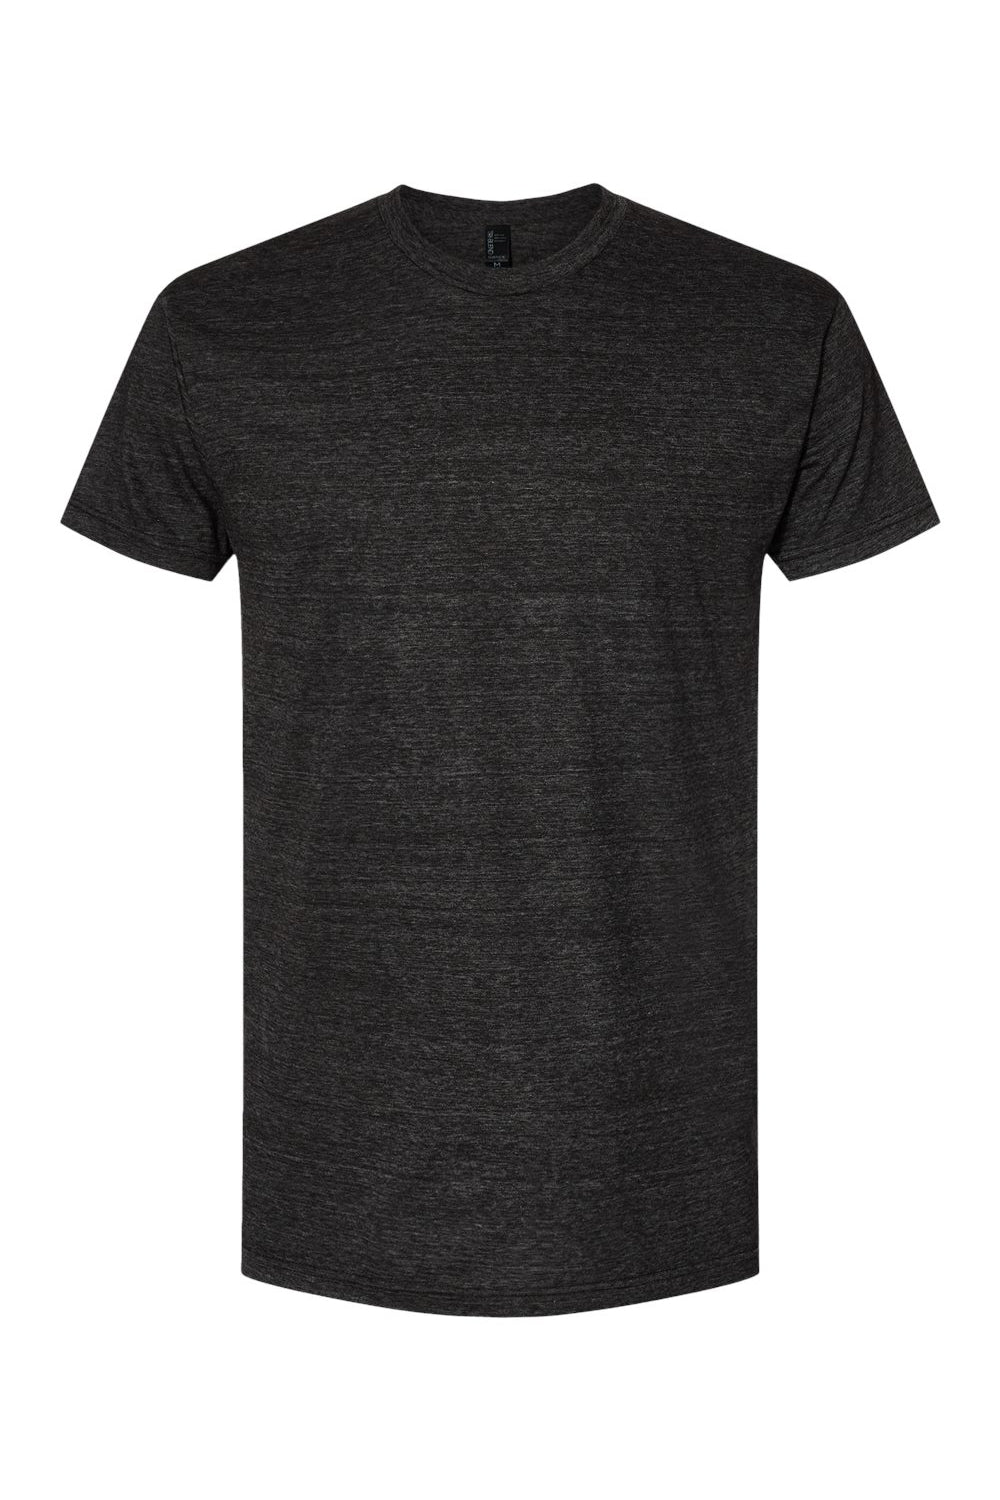 Bayside 5710 Mens USA Made Short Sleeve Crewneck T-Shirt Charcoal Grey Flat Front